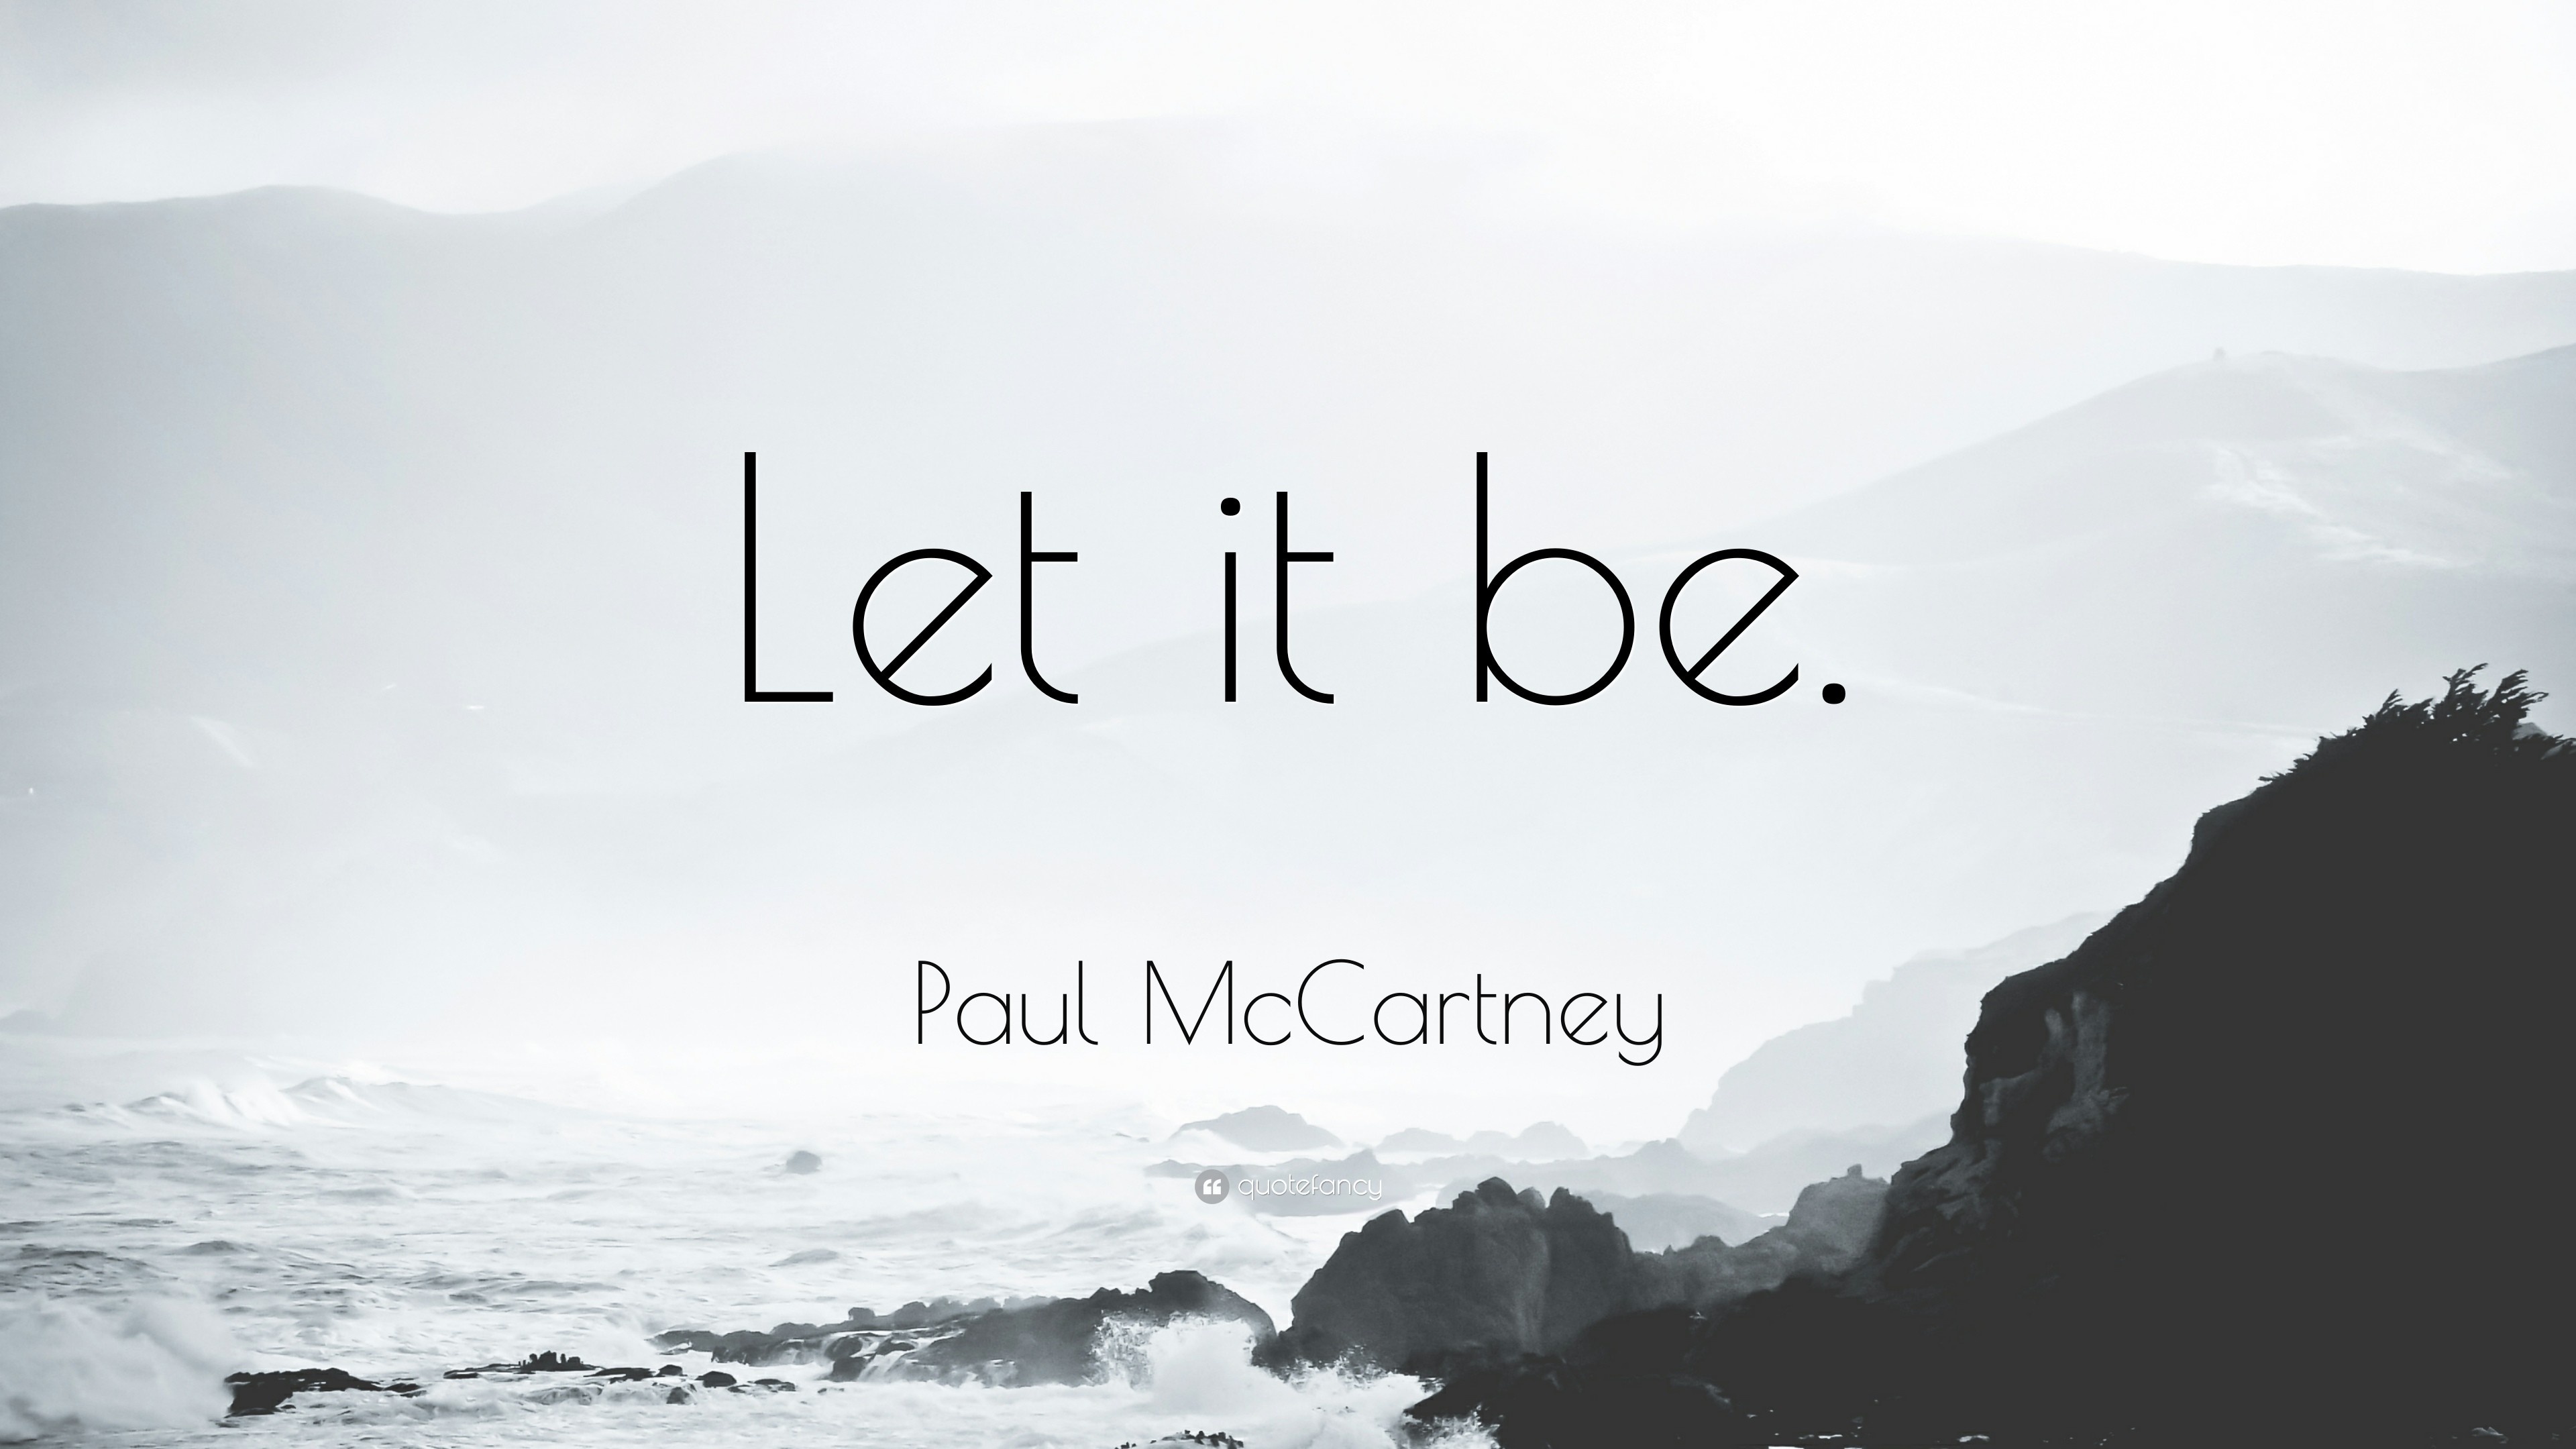 3840x2160 Paul McCartney Quote: “Let it be.”